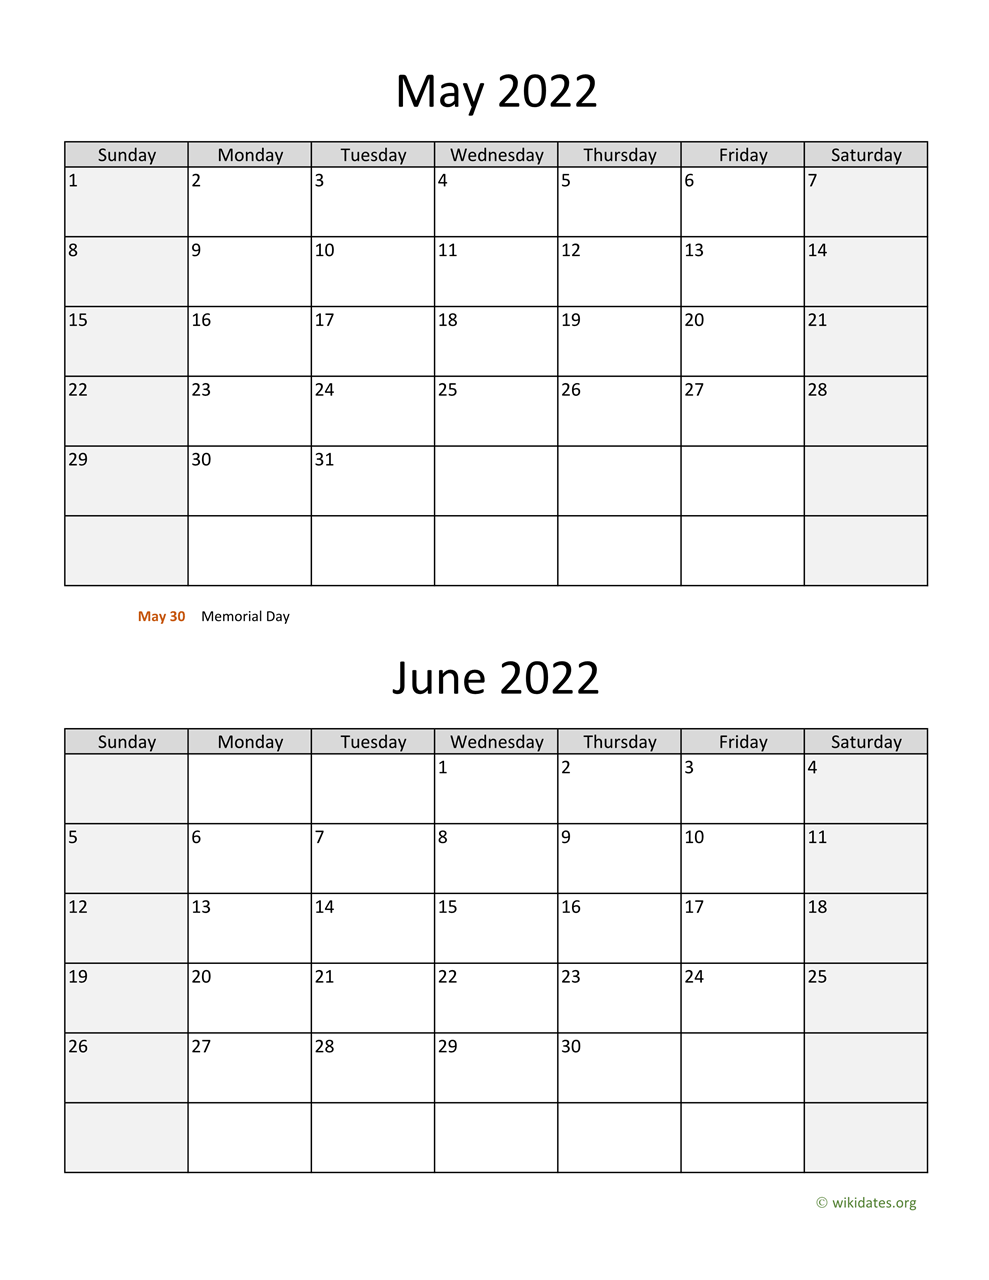 May To June 2022 Calendar May And June 2022 Calendar | Wikidates.org